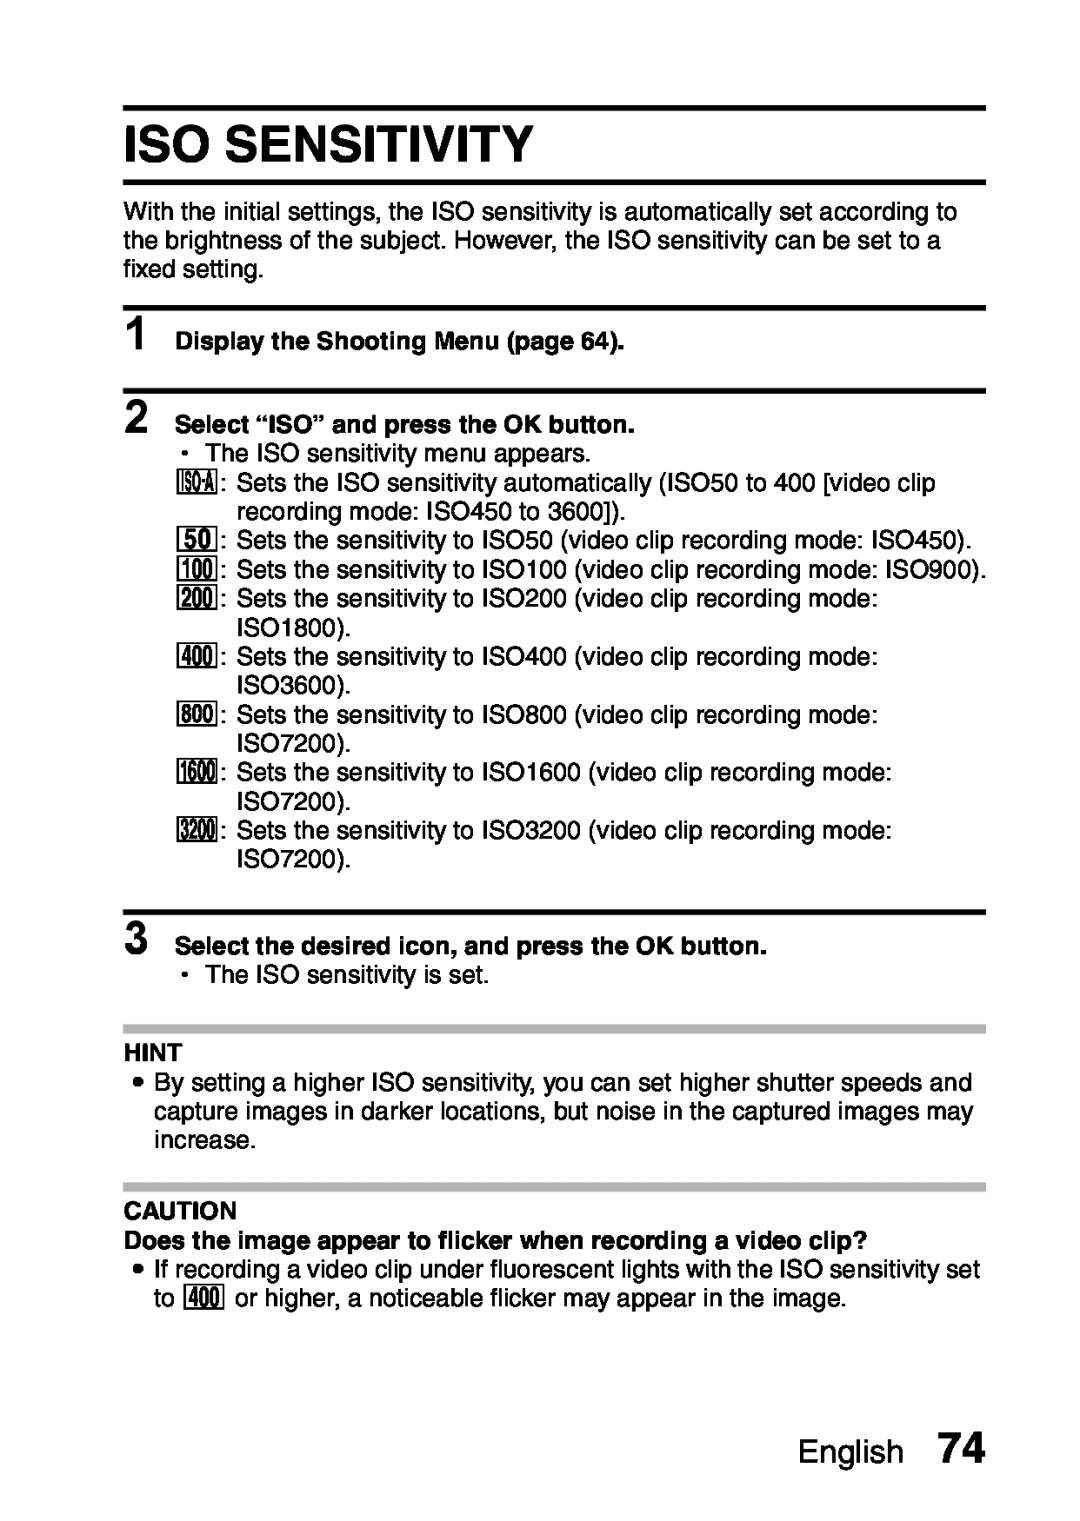 Samsung R50 Iso Sensitivity, English, Display the Shooting Menu page, Select “ISO” and press the OK button, Hint 